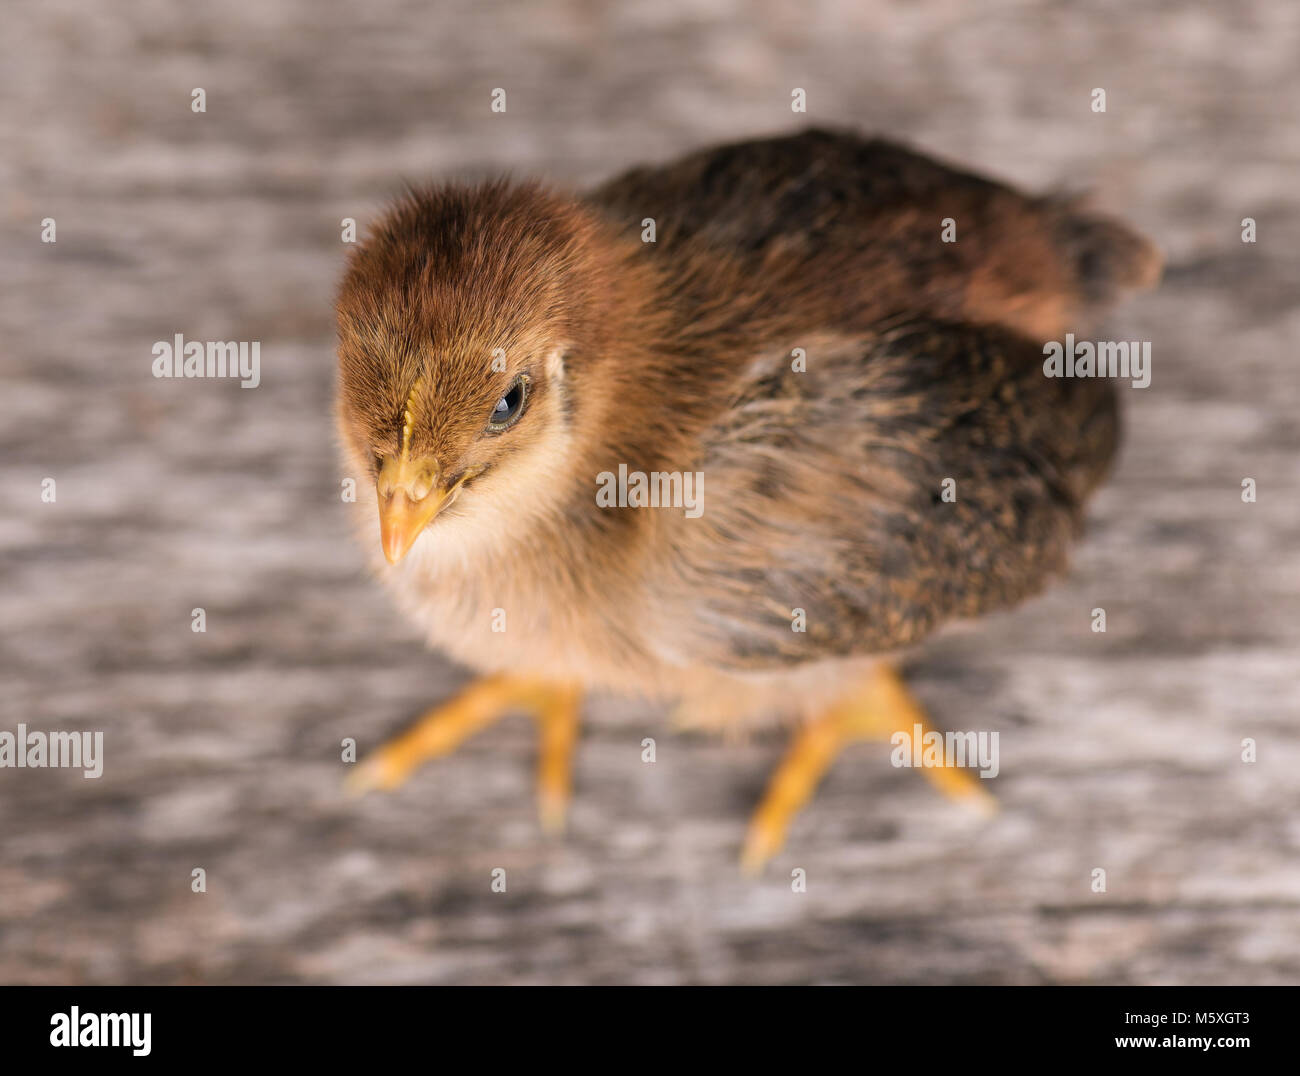 Cute little newborn chicken Stock Photo